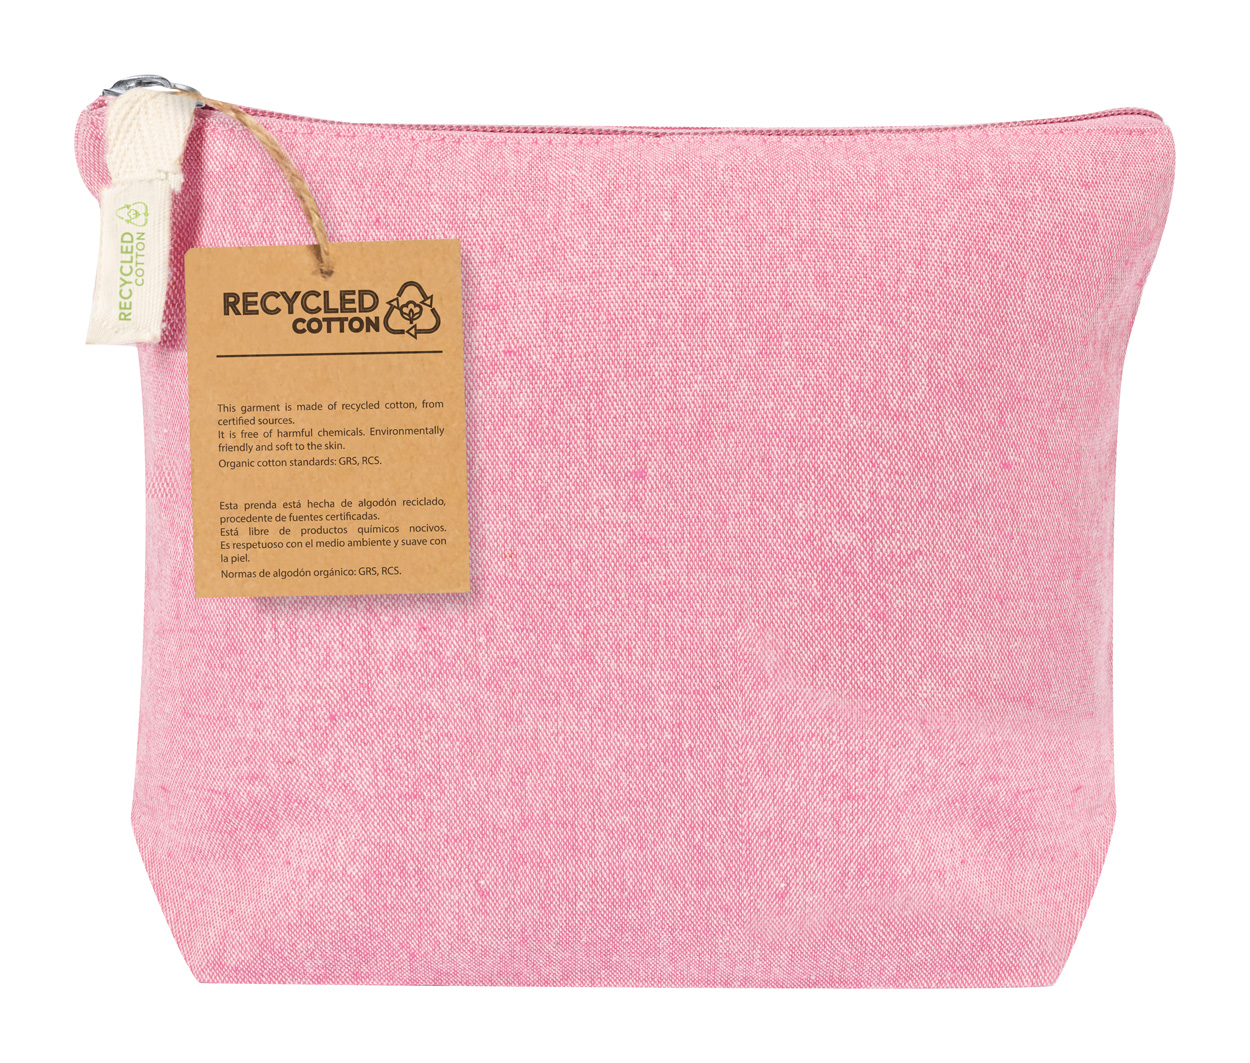 Belix cosmetic bag - pink